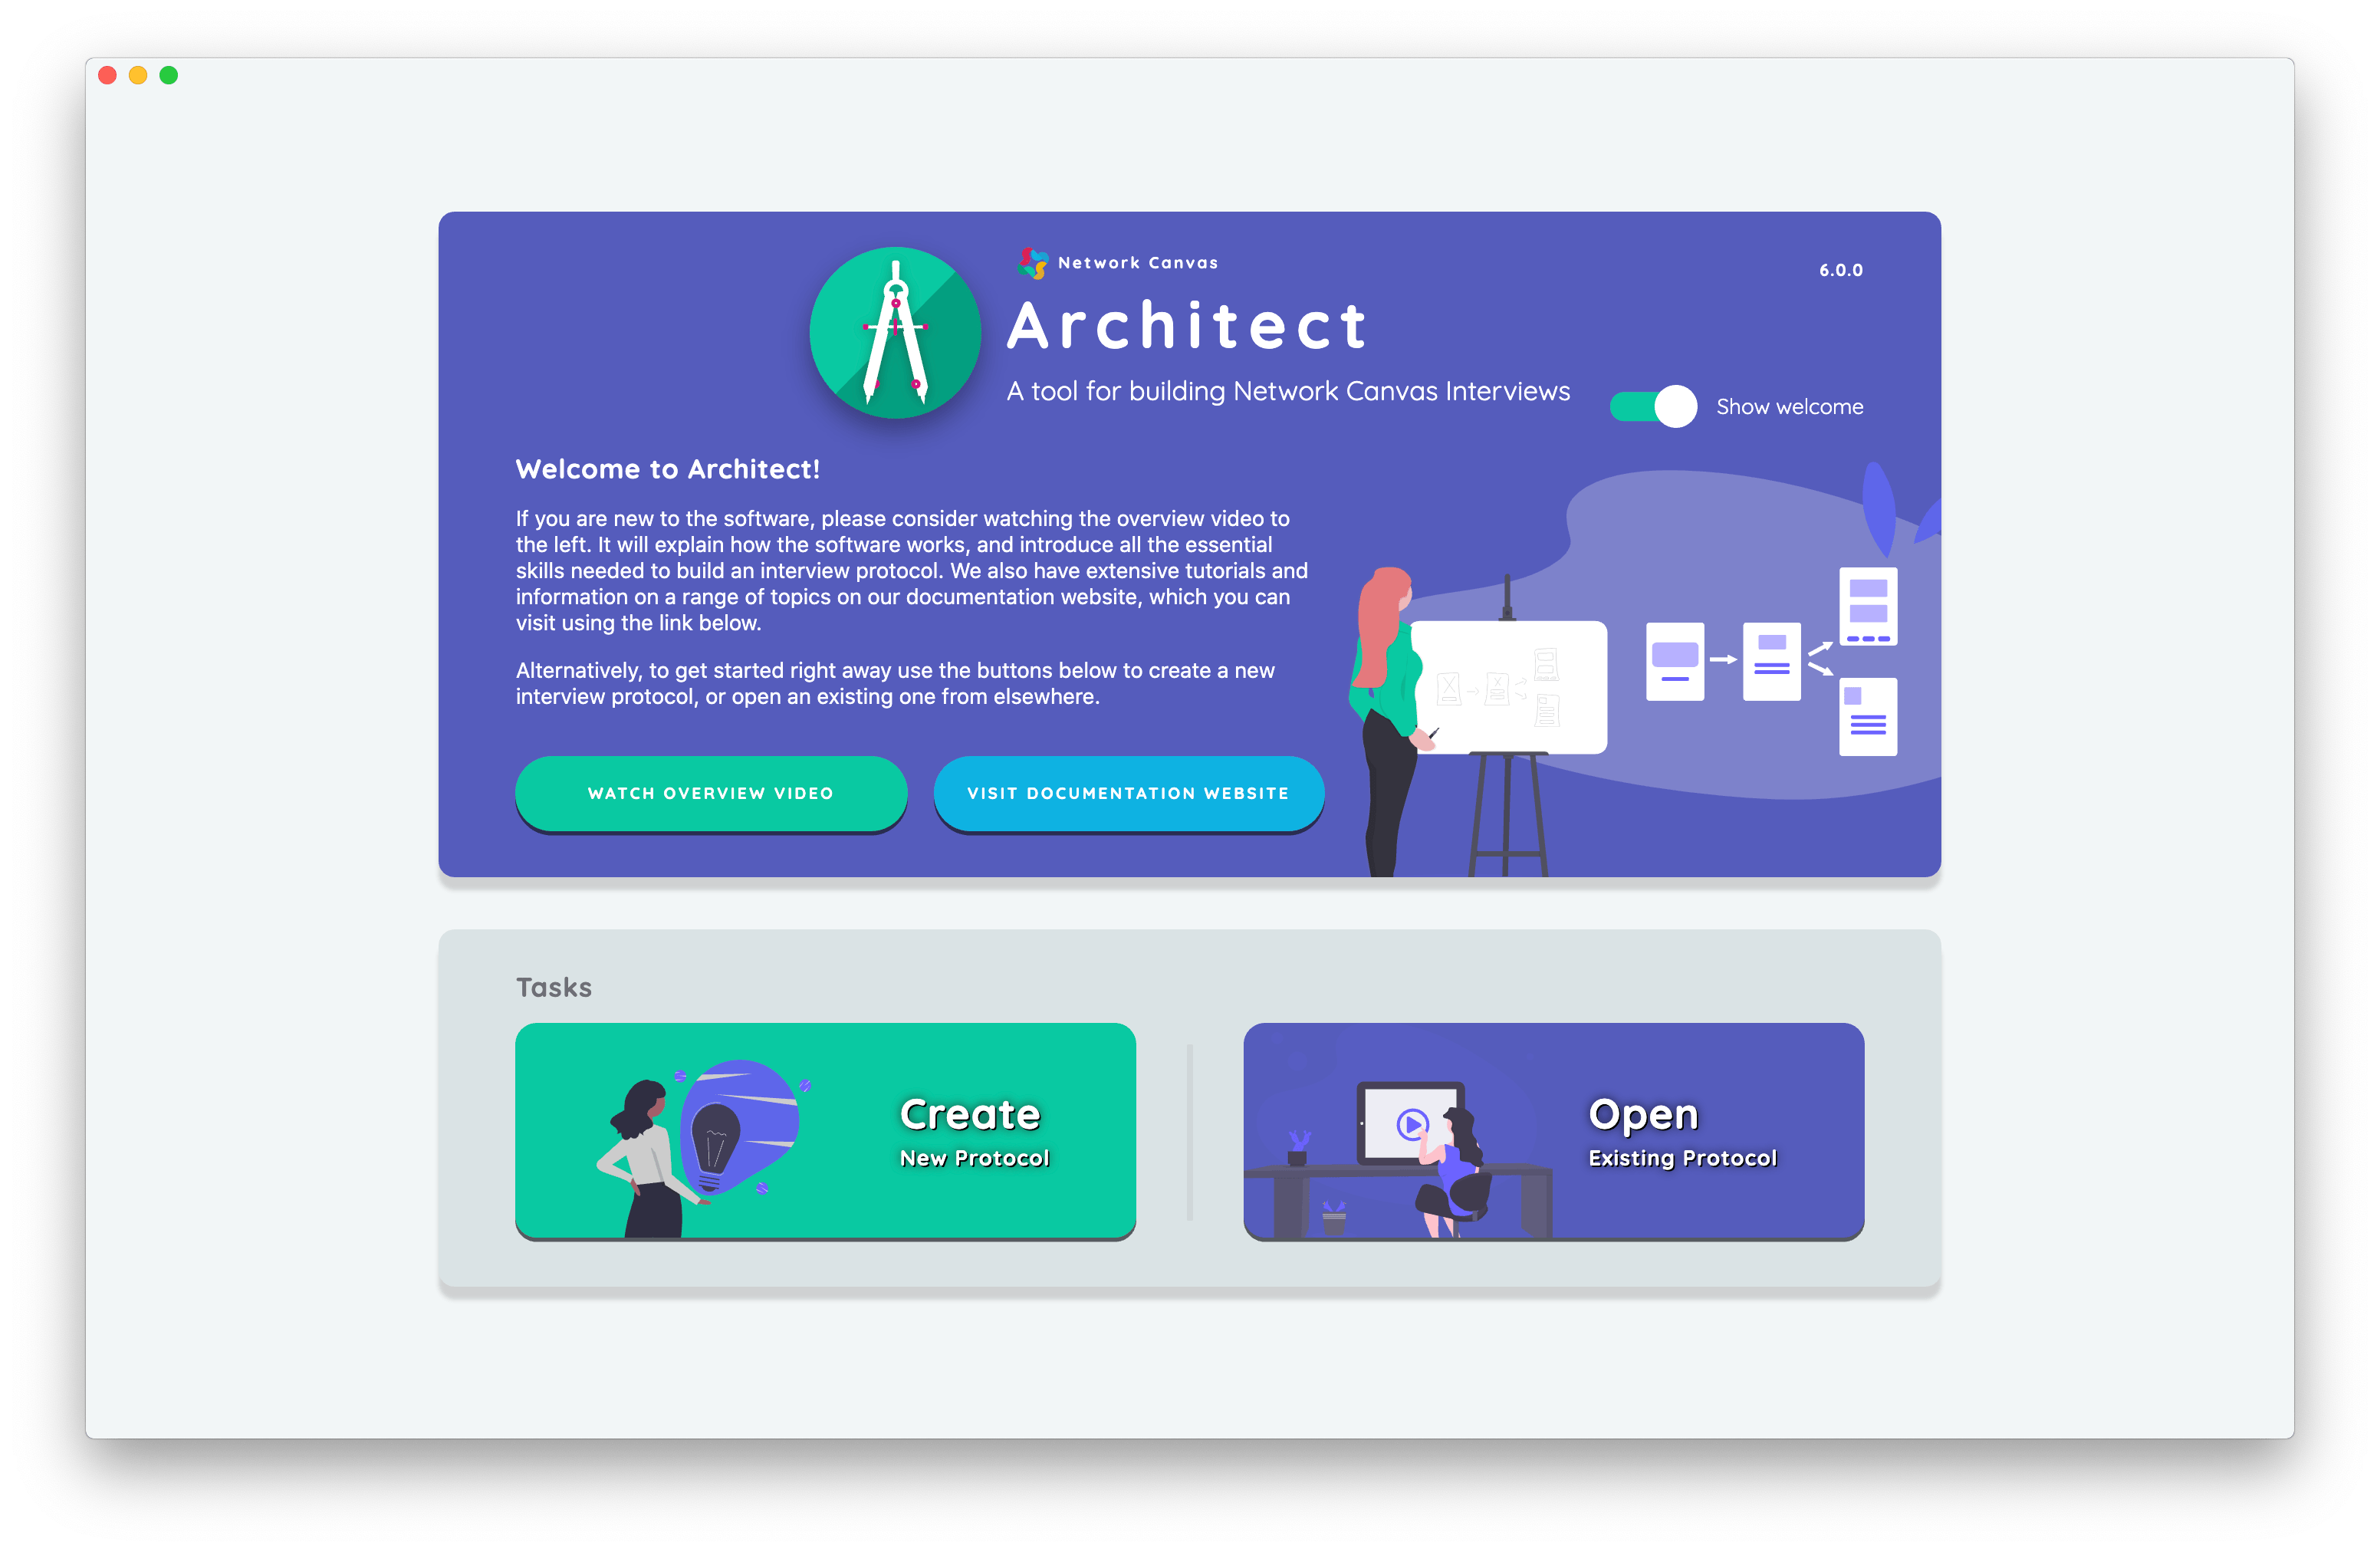 The Architect start screen